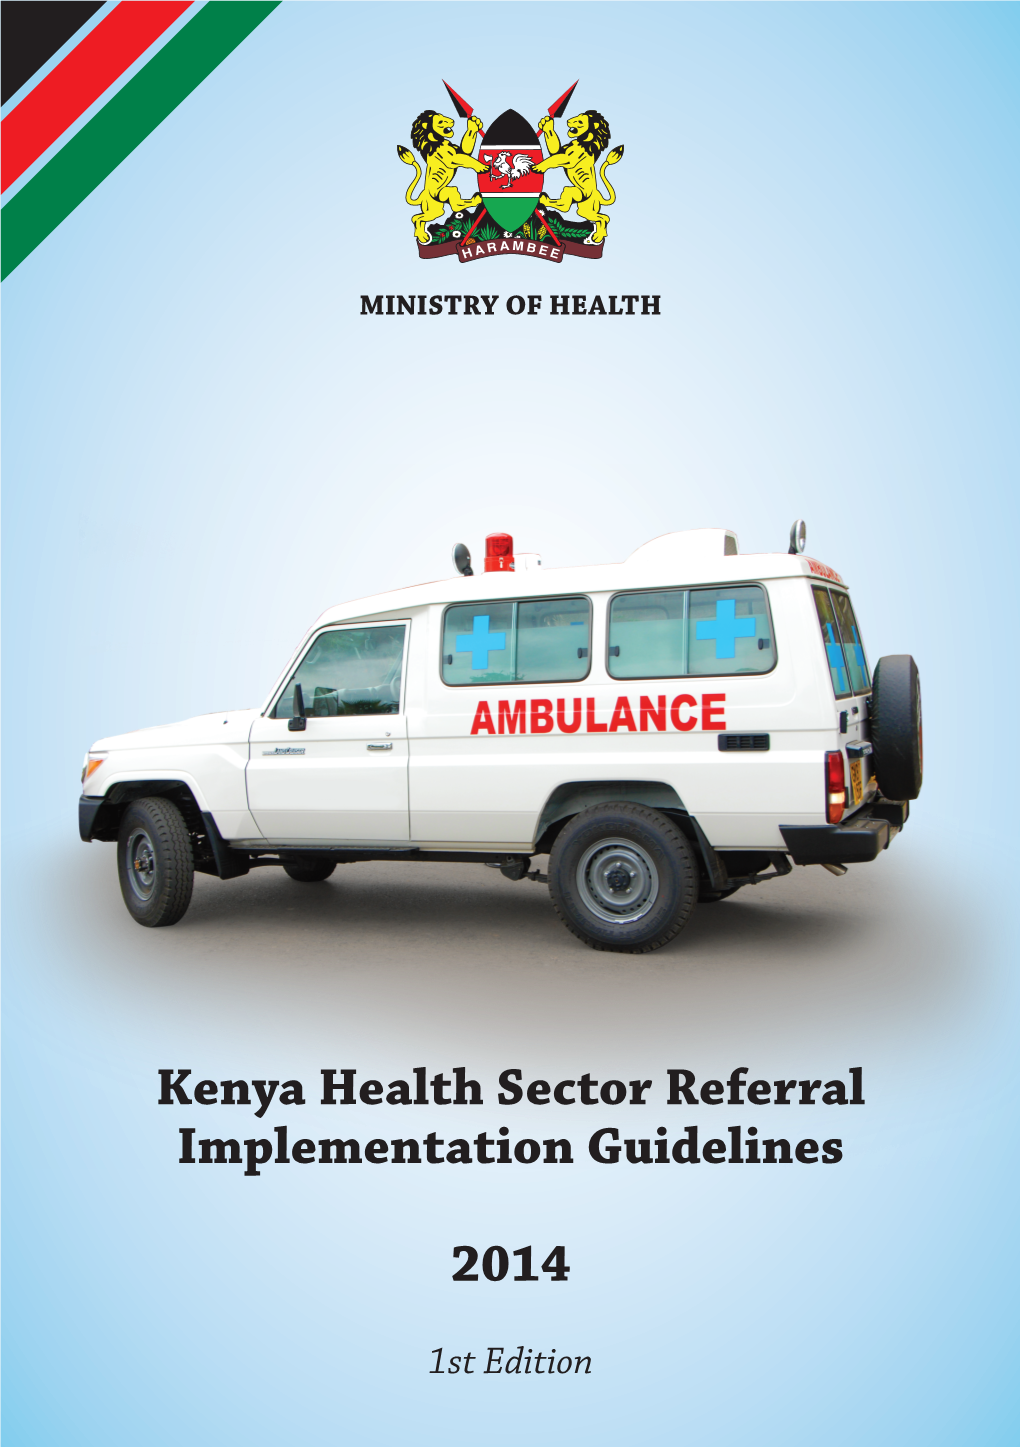 Kenya Health Sector Referral Implementation Guidelines 2014